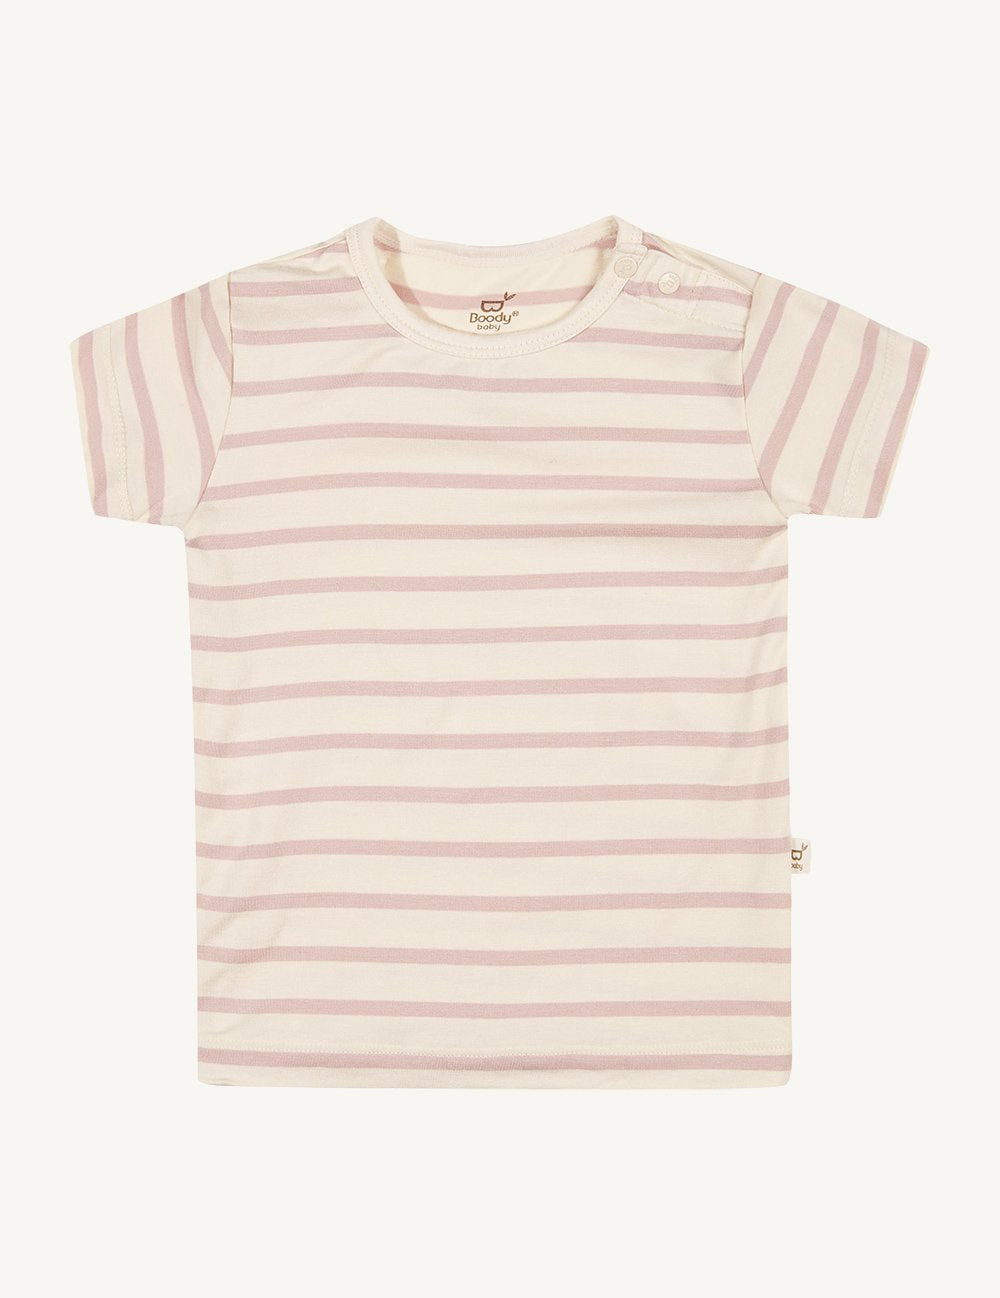 Boody Baby T-Shirt - Chalk/Rose Stripe